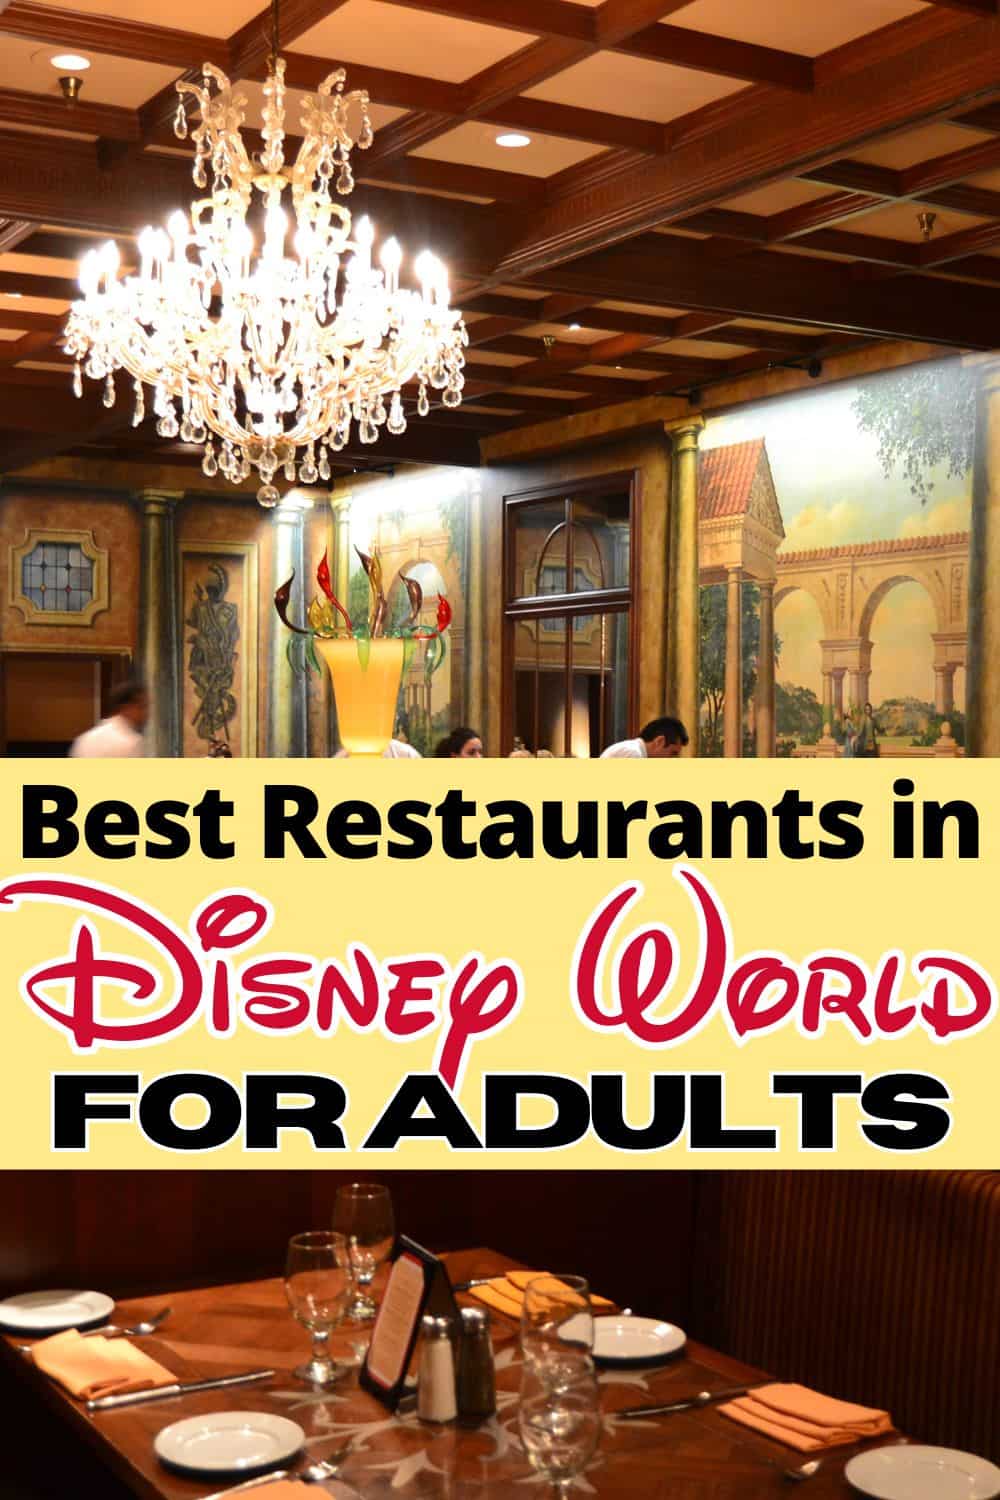 Best Restaurants in Disney World for Adults